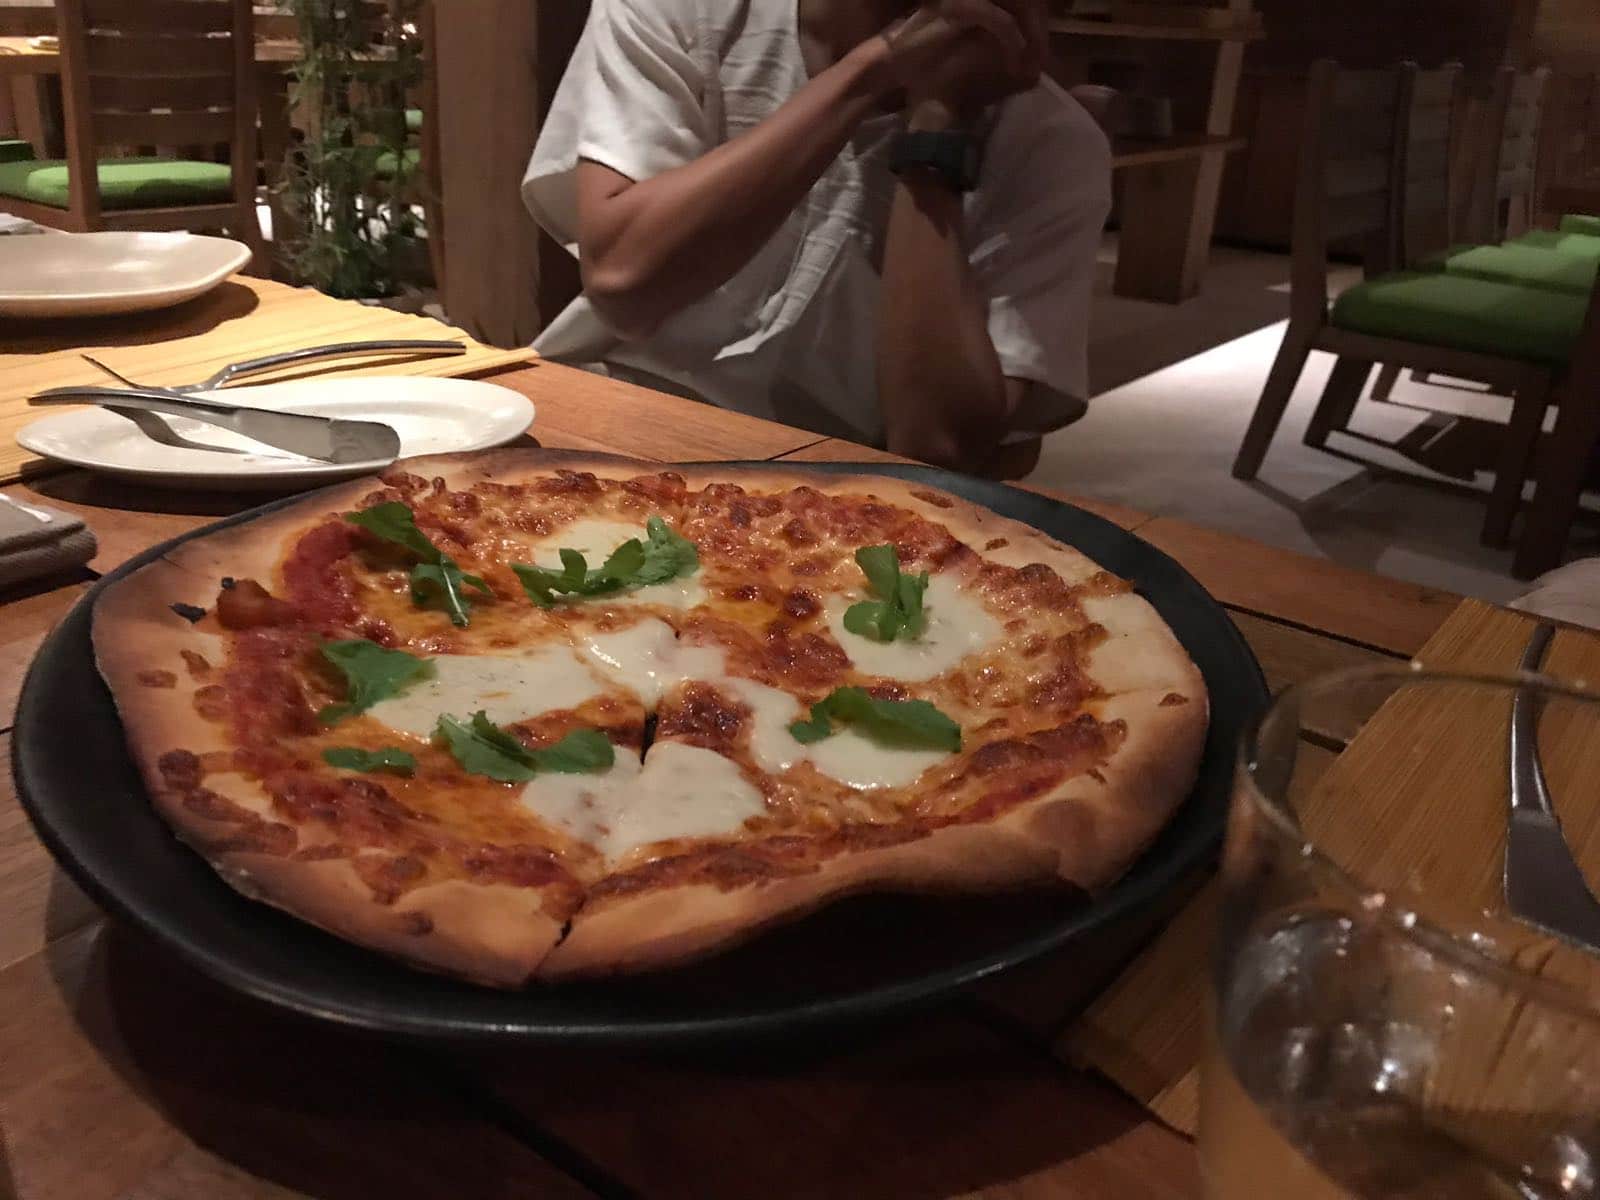 Review of Six Senses Con Dao resort - pizza!